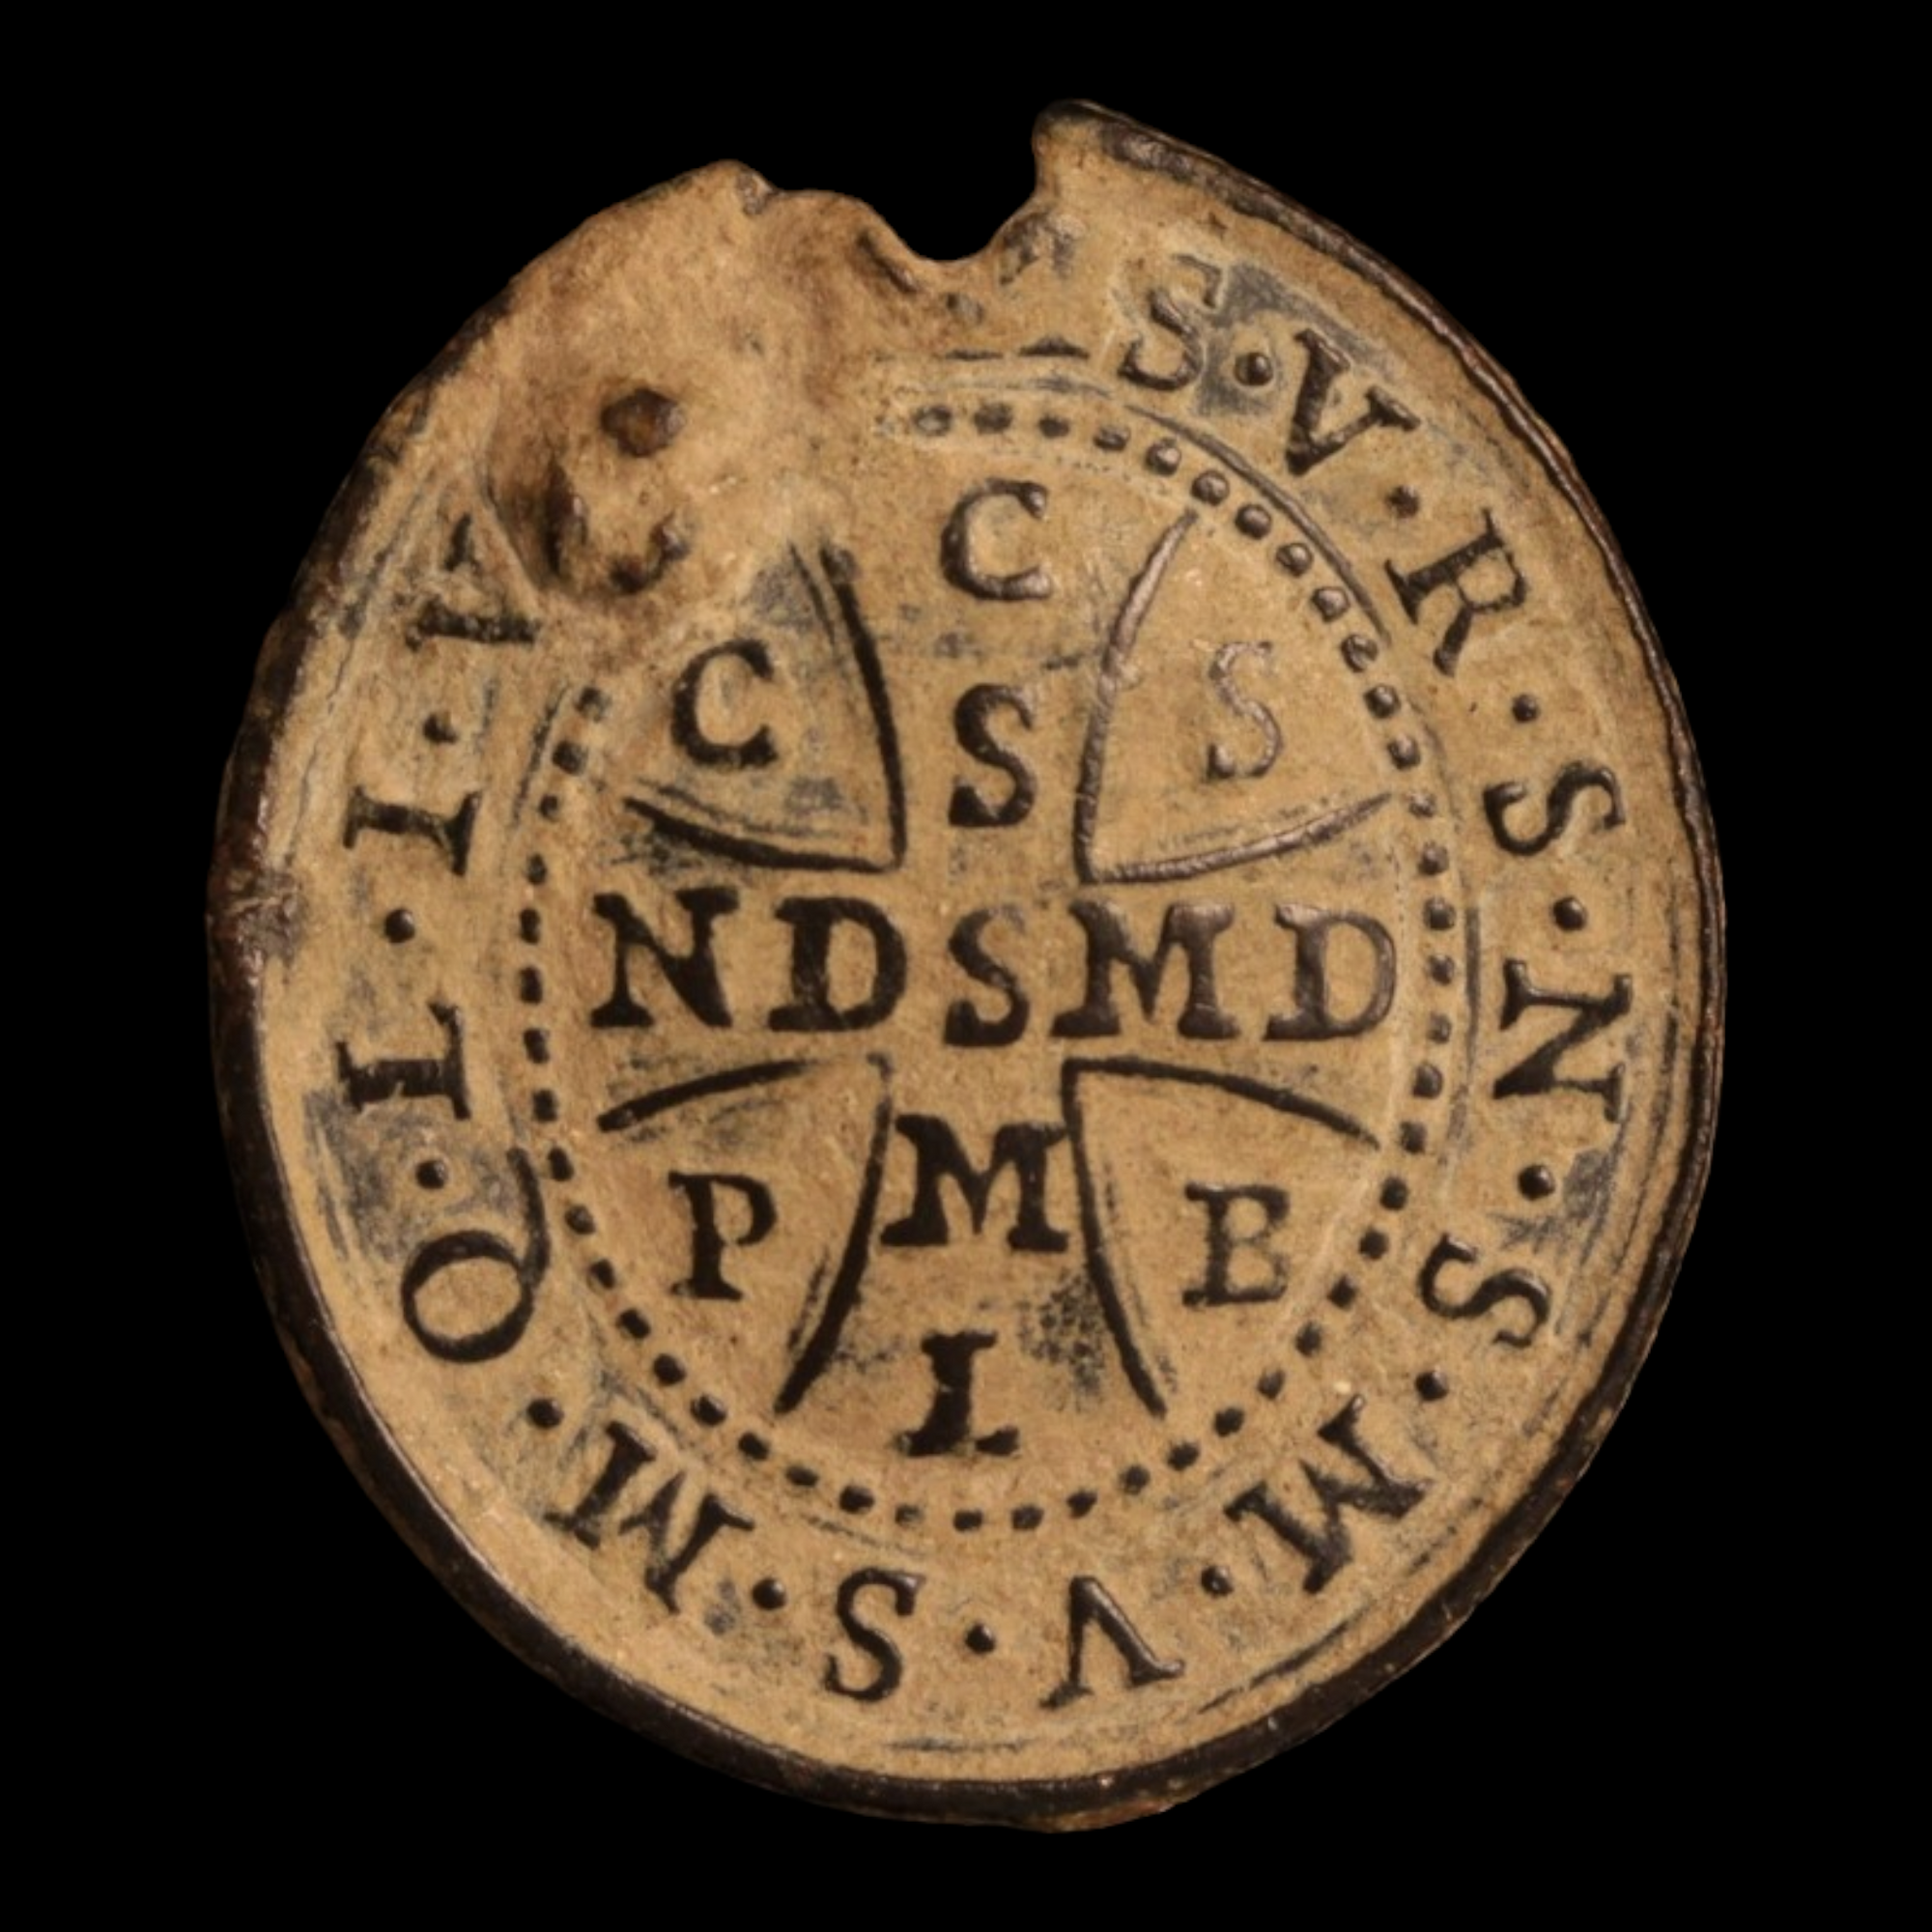 Religious Medal, Catholic Church, St. Benedict of Nursia, 27mm - 1500s to 1700s - Spanish Empire